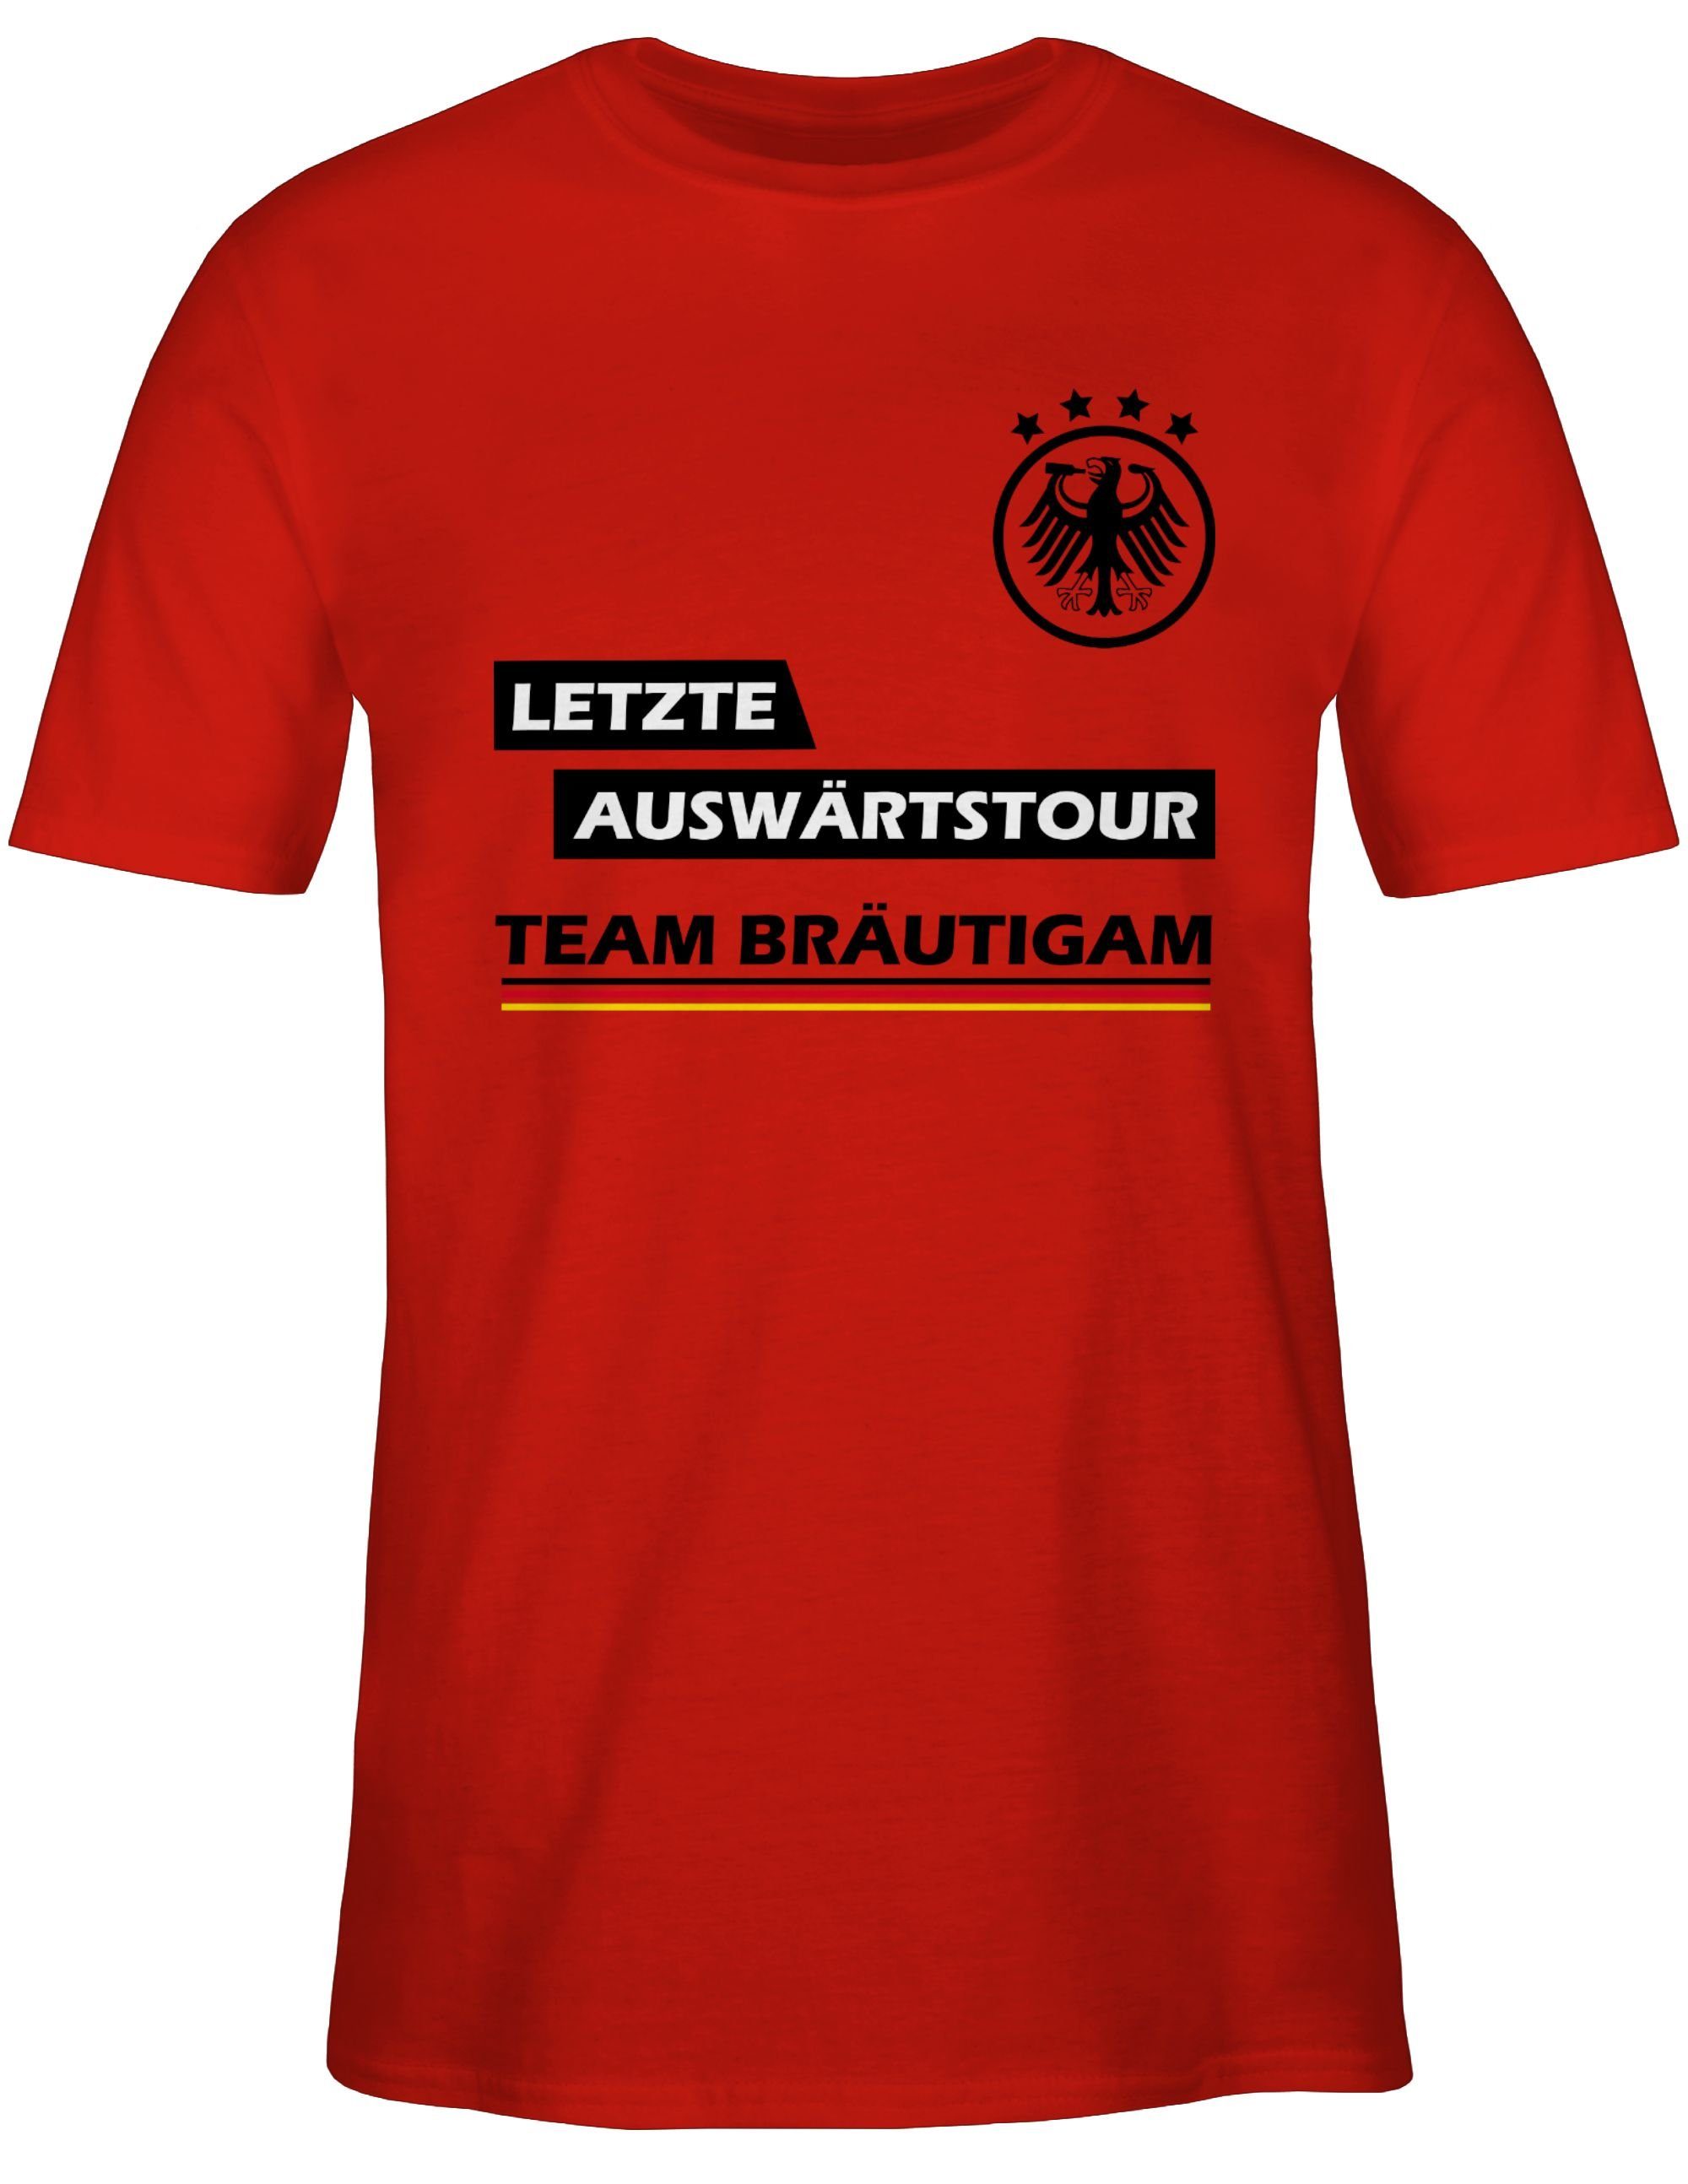 Shirtracer T-Shirt JGA Rot Bräutigam Auswärtstour Team Männer Letzte 3